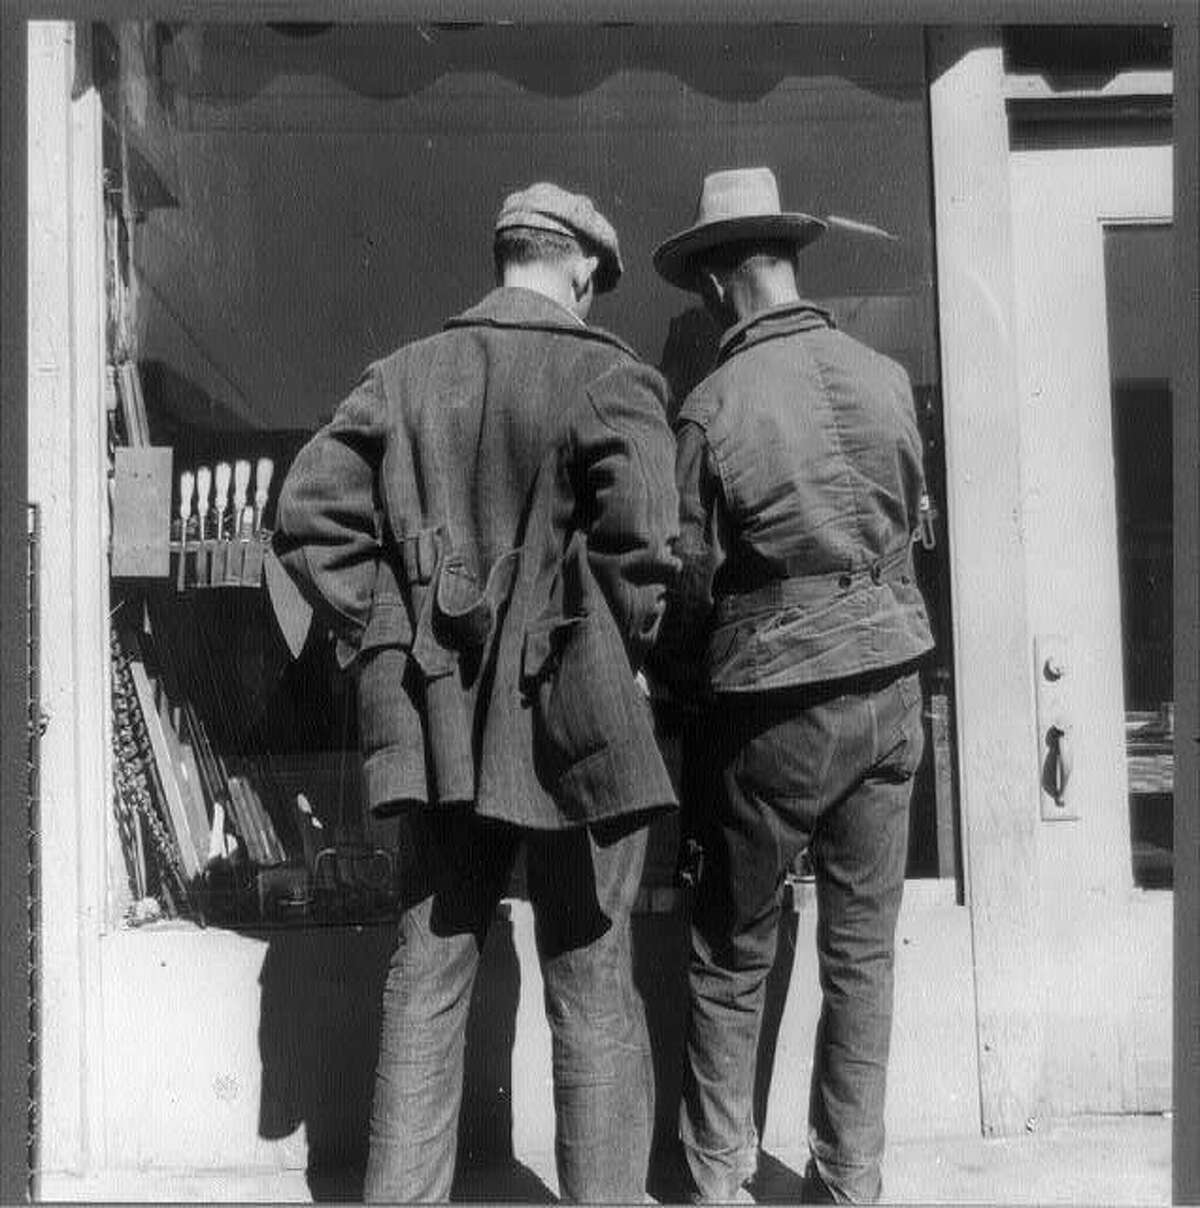 "Skid Row." Howard Street, San Francisco, California - Feb. 1937